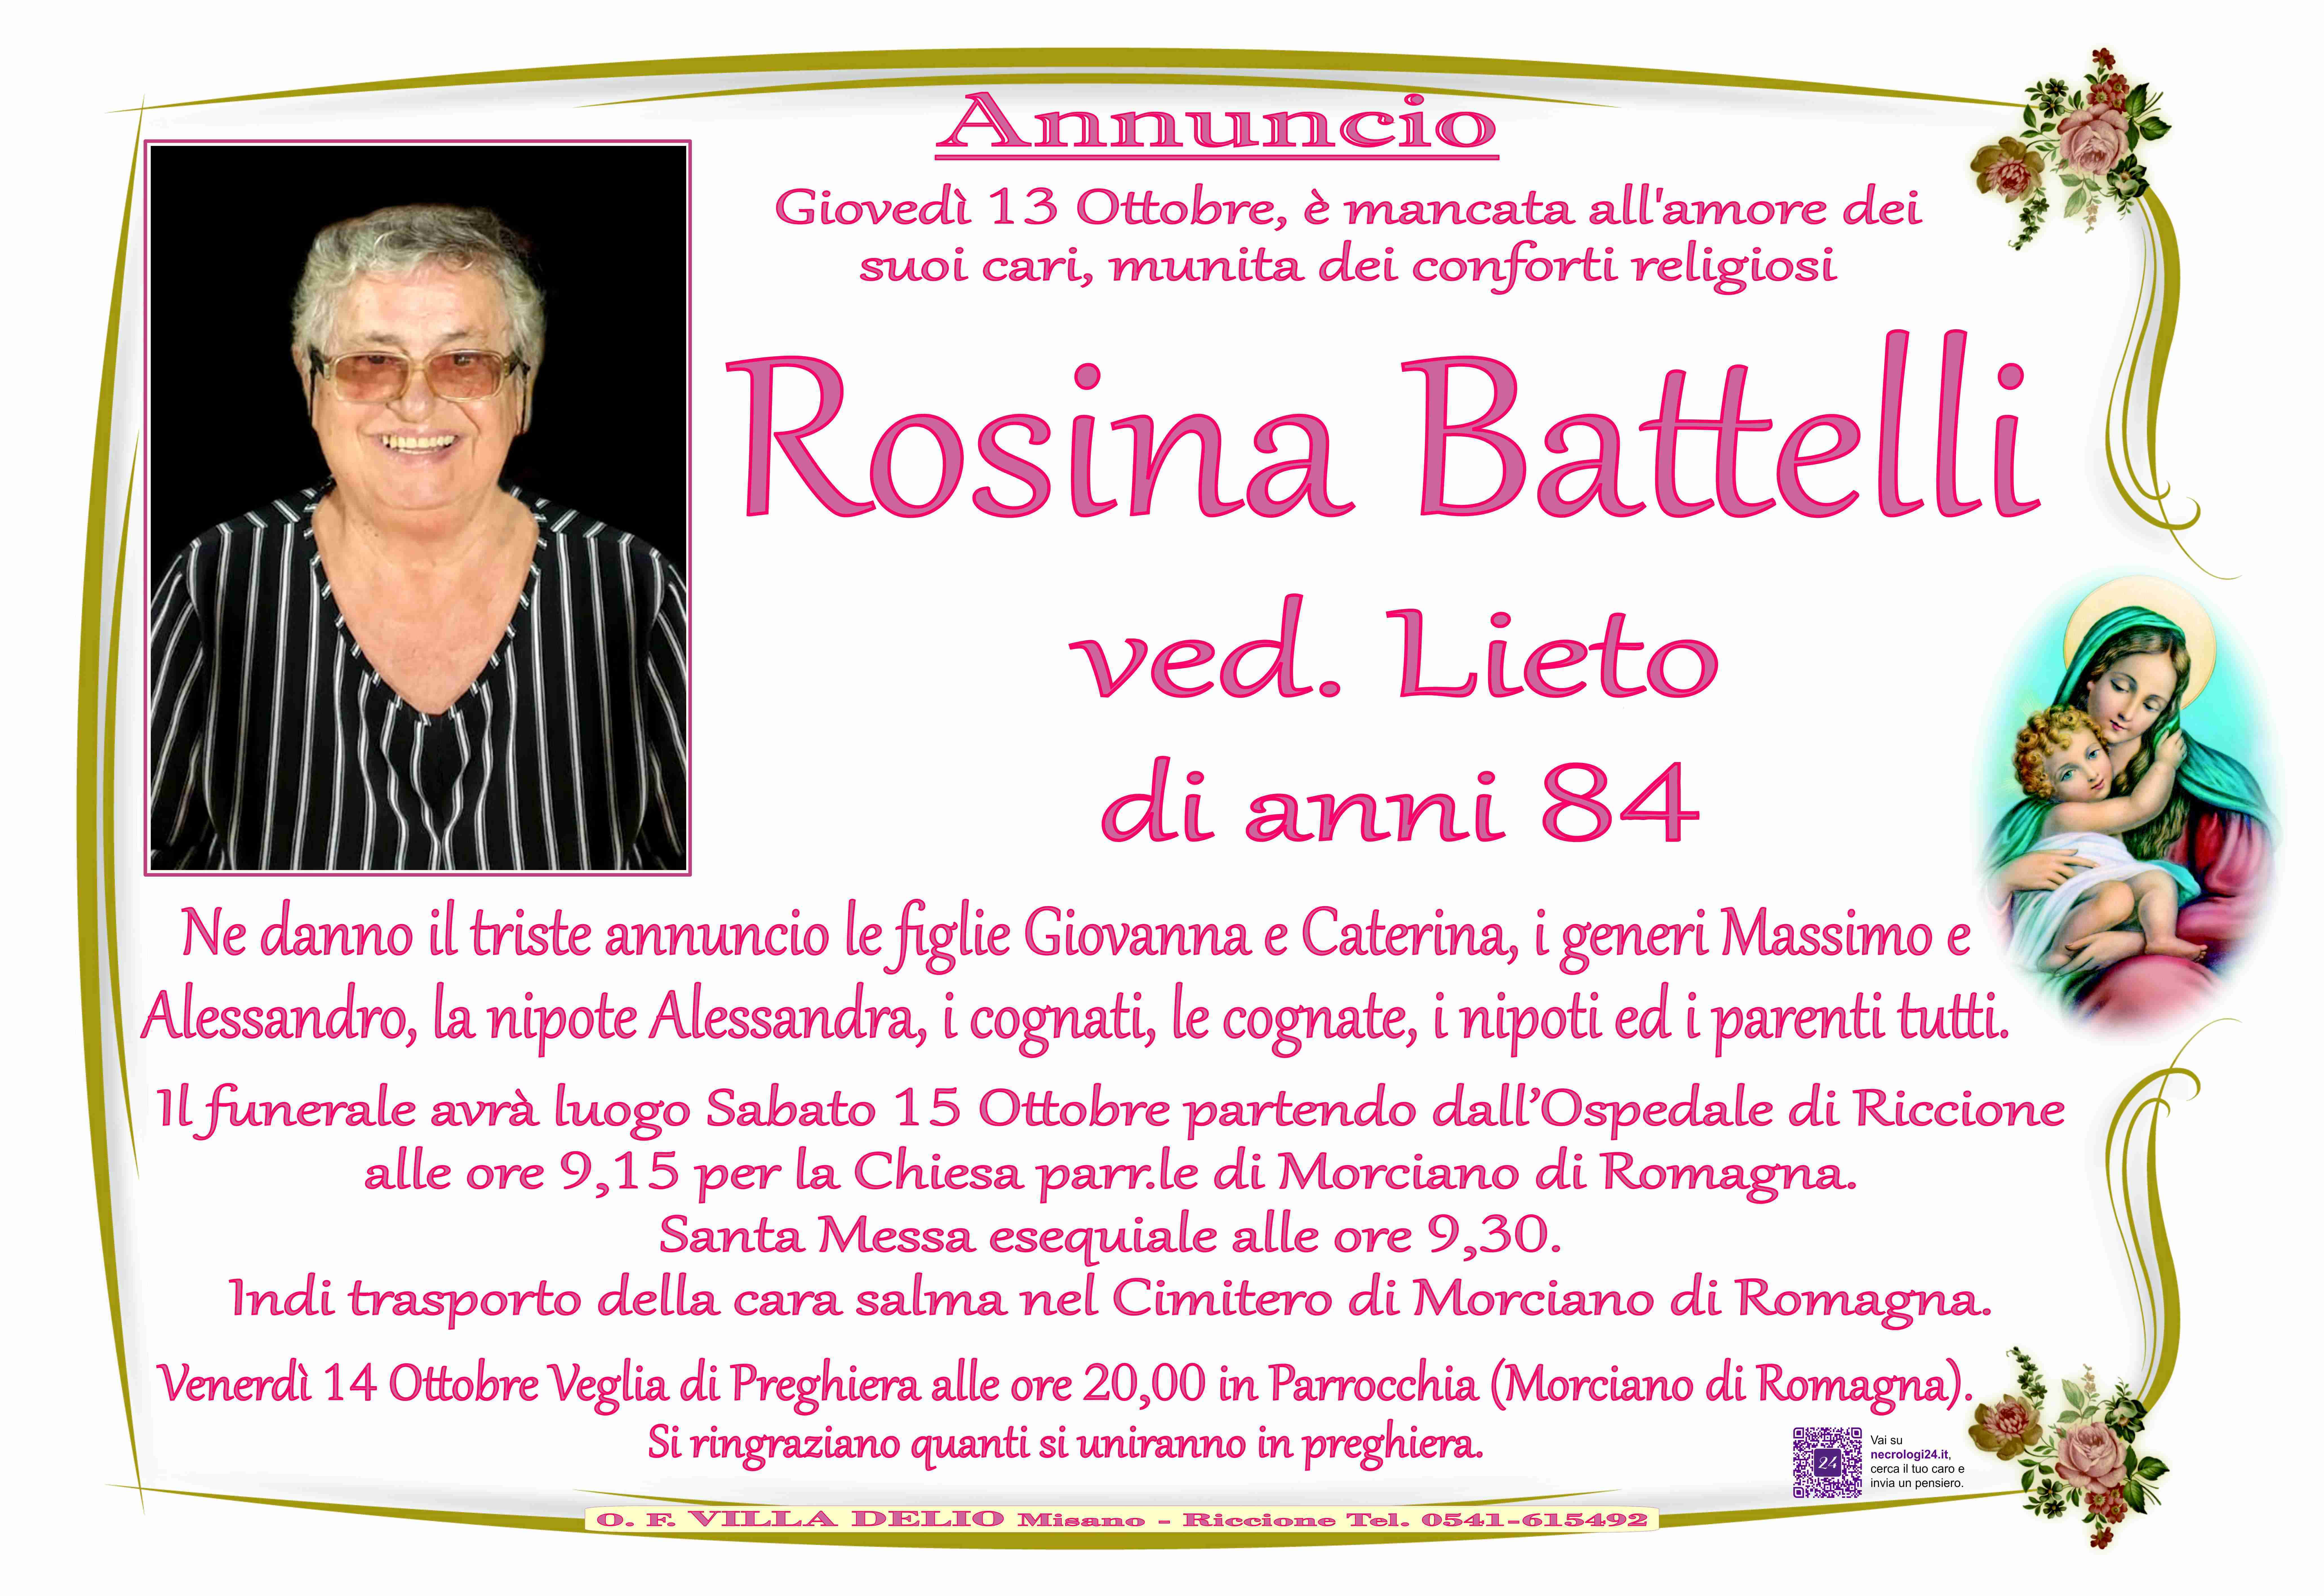 Rosina Battelli